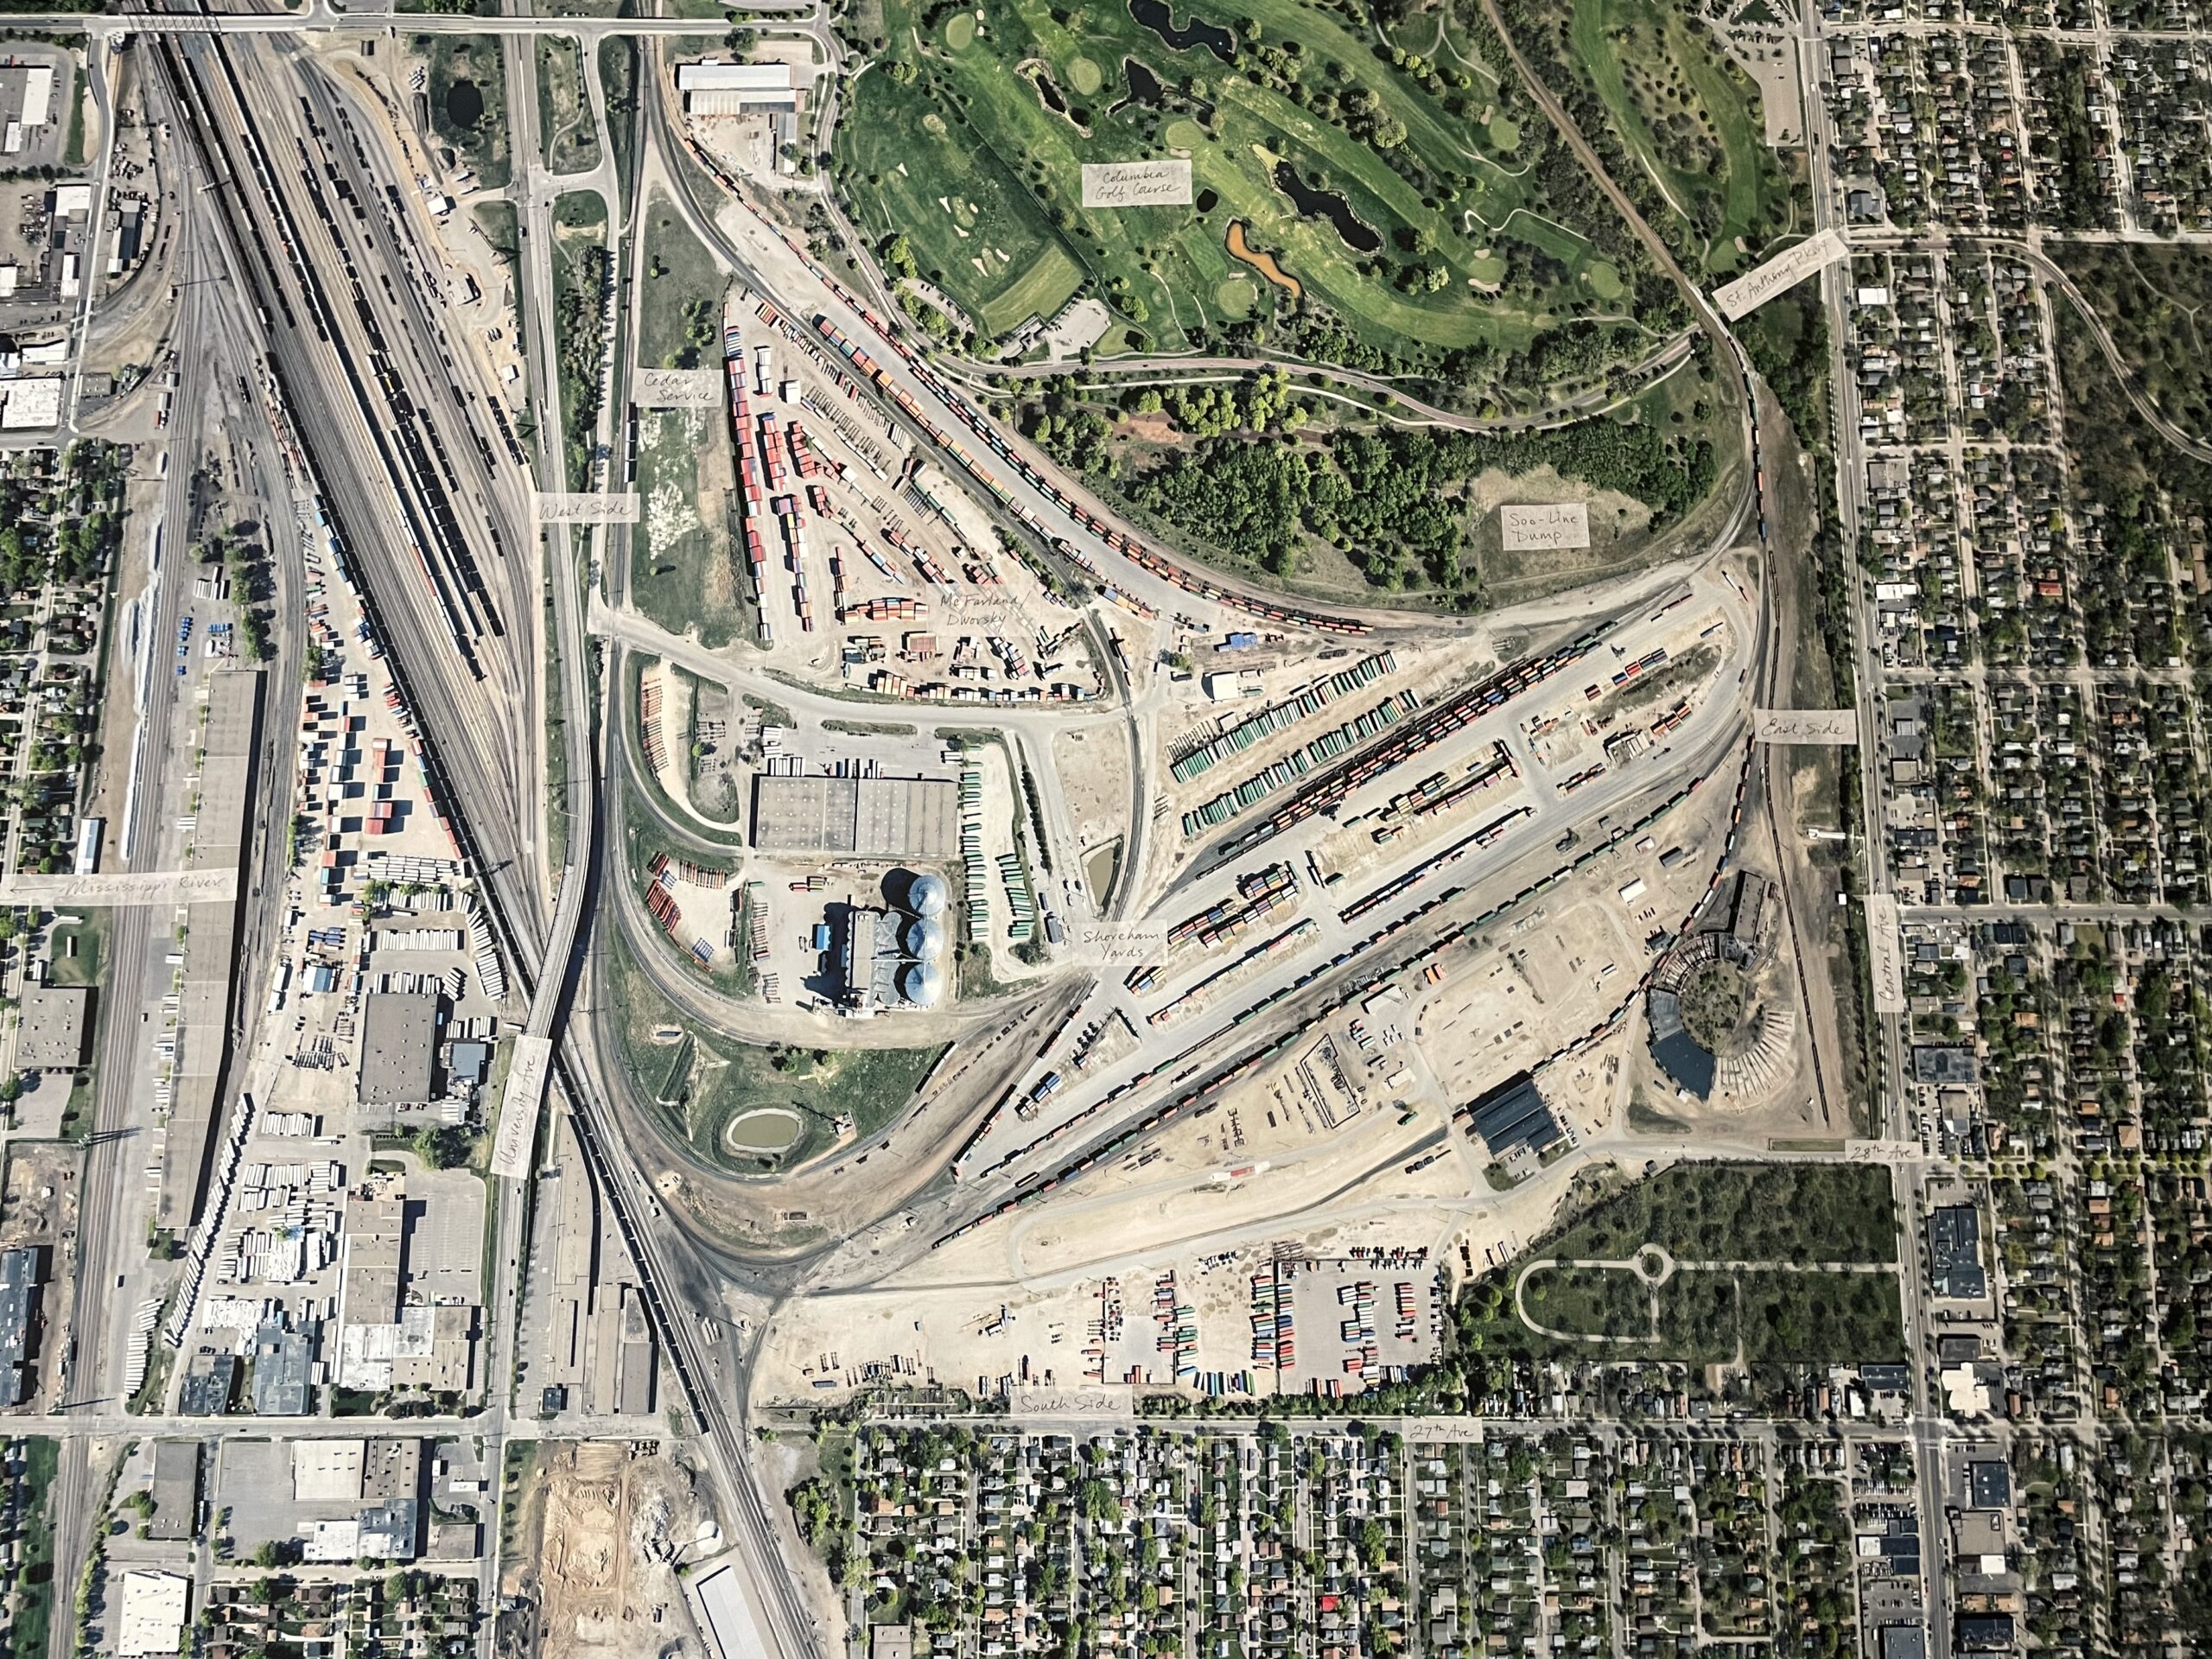 Aerial photograph of train yard with adjacent neighborhoods